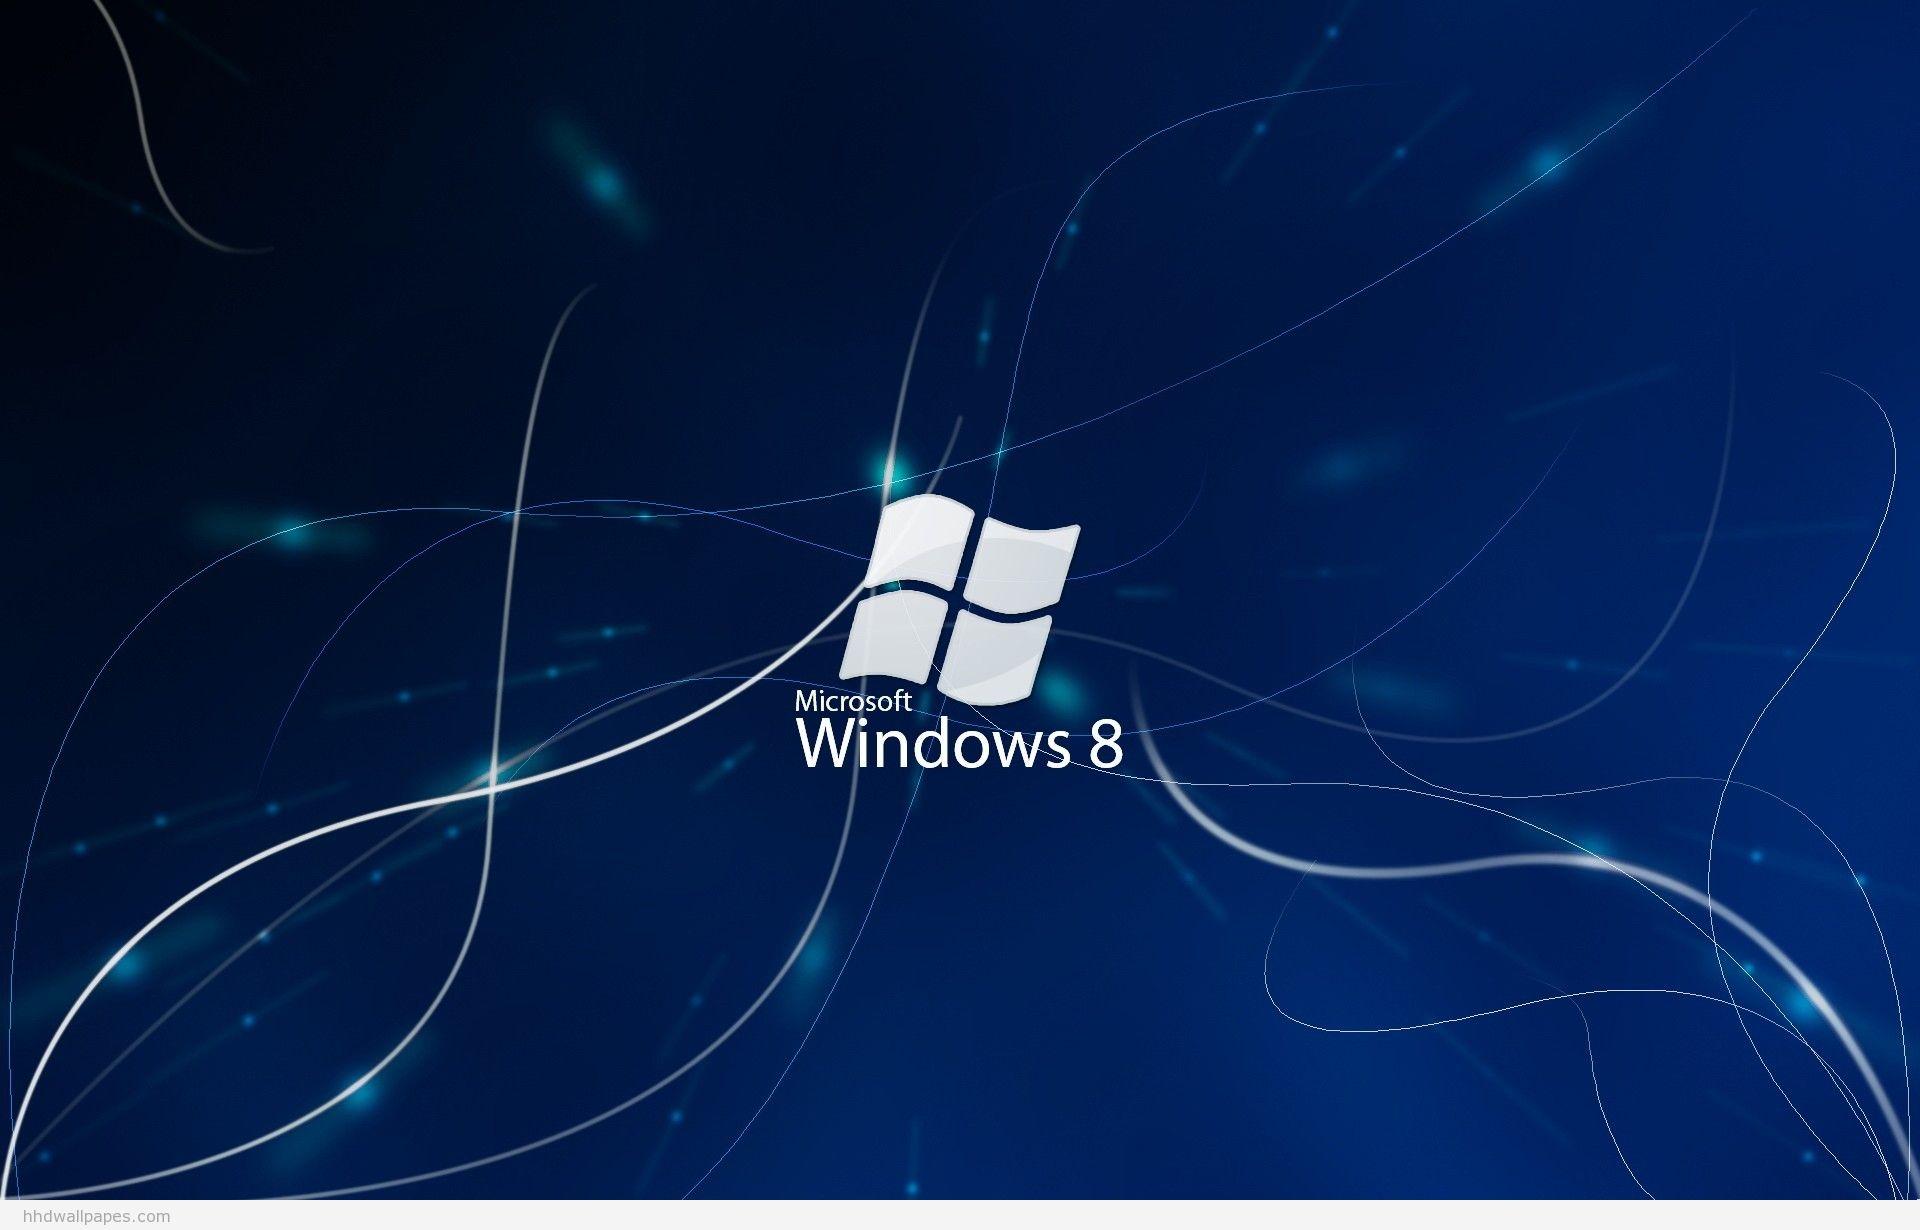 Wallpapers For > Hd Desktop Backgrounds Windows 8